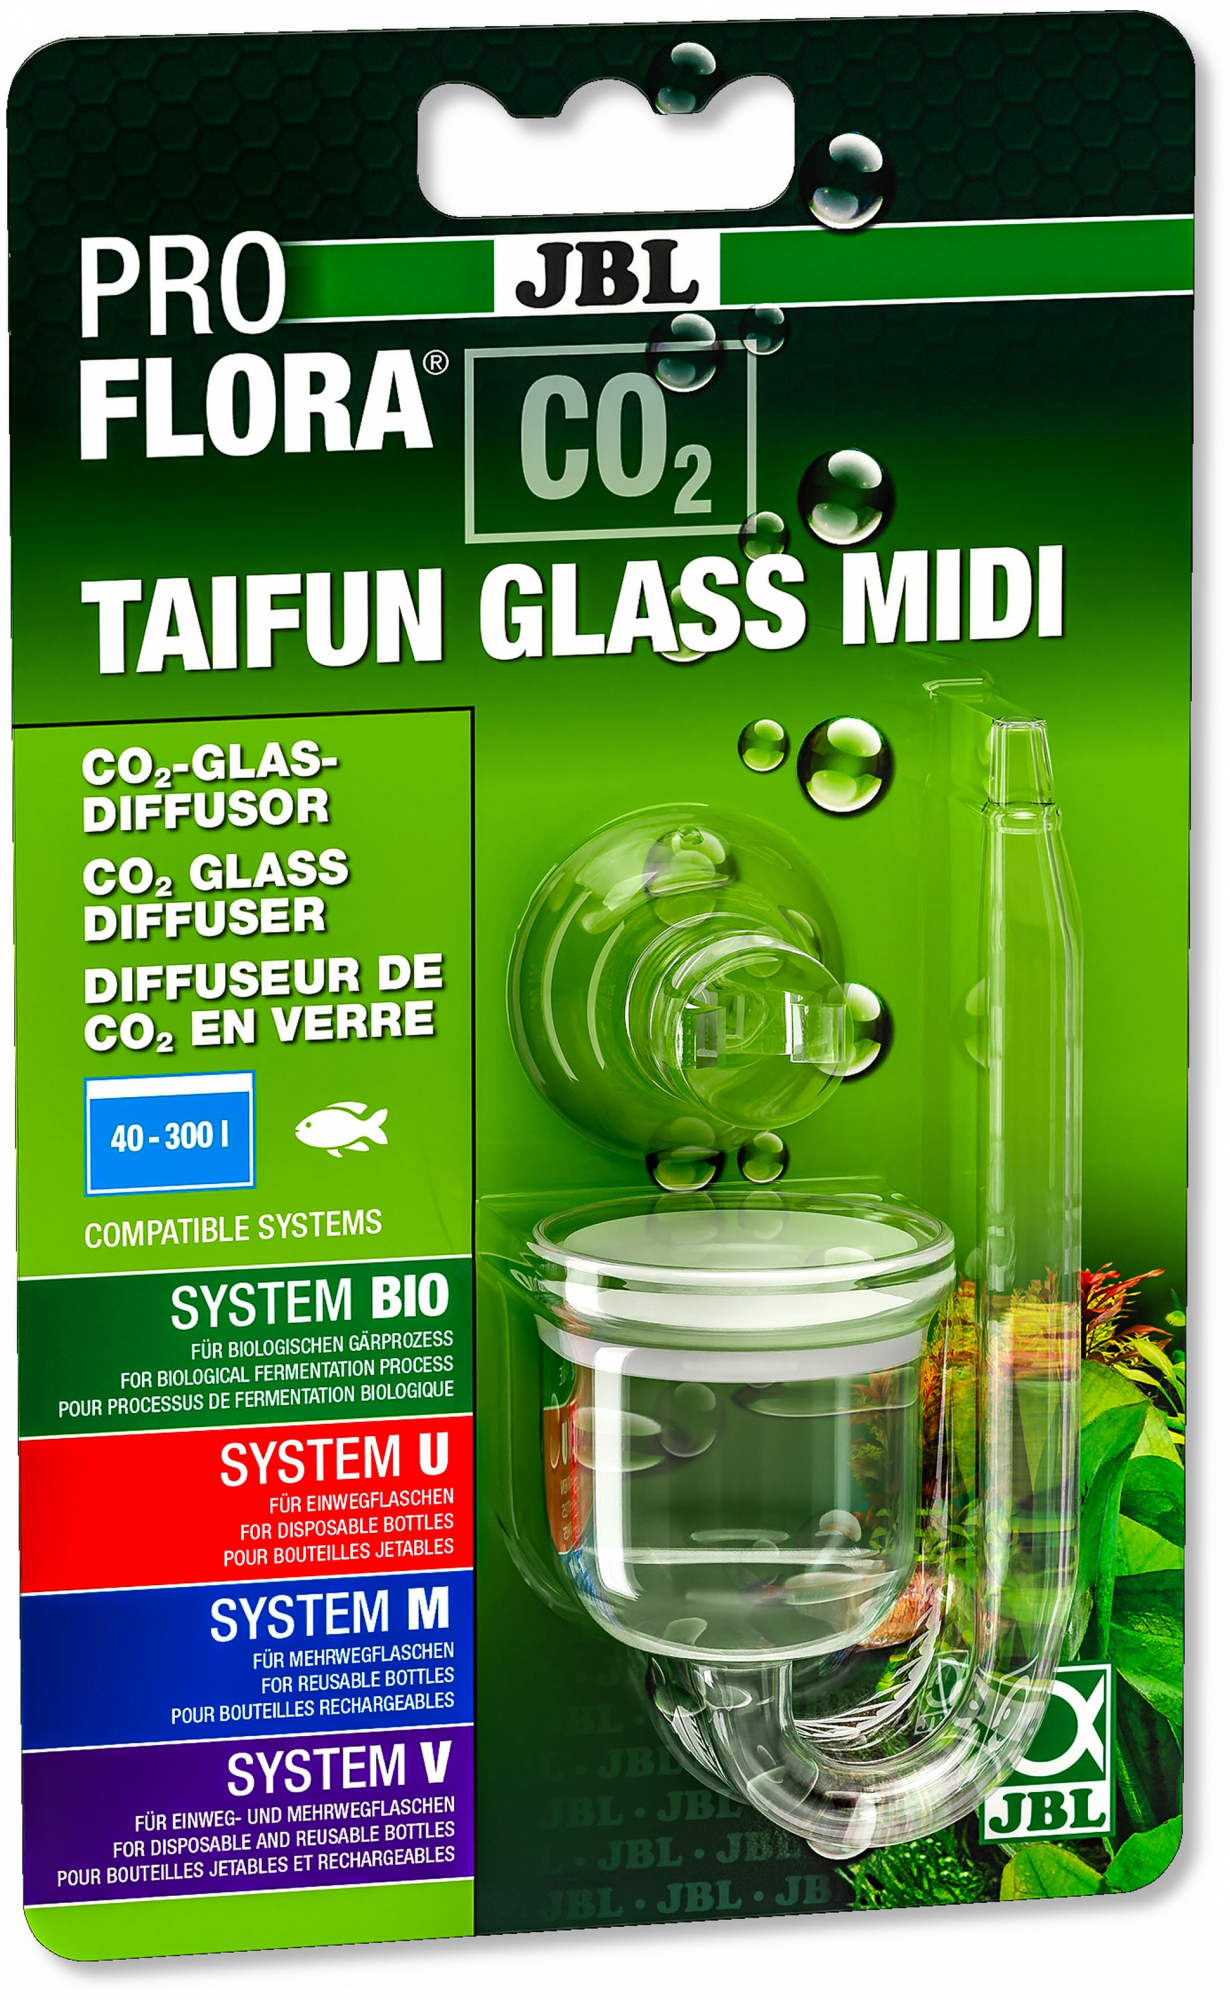 JBL Proflora Taifun Glass Midi Difusor de CO2 de cristal